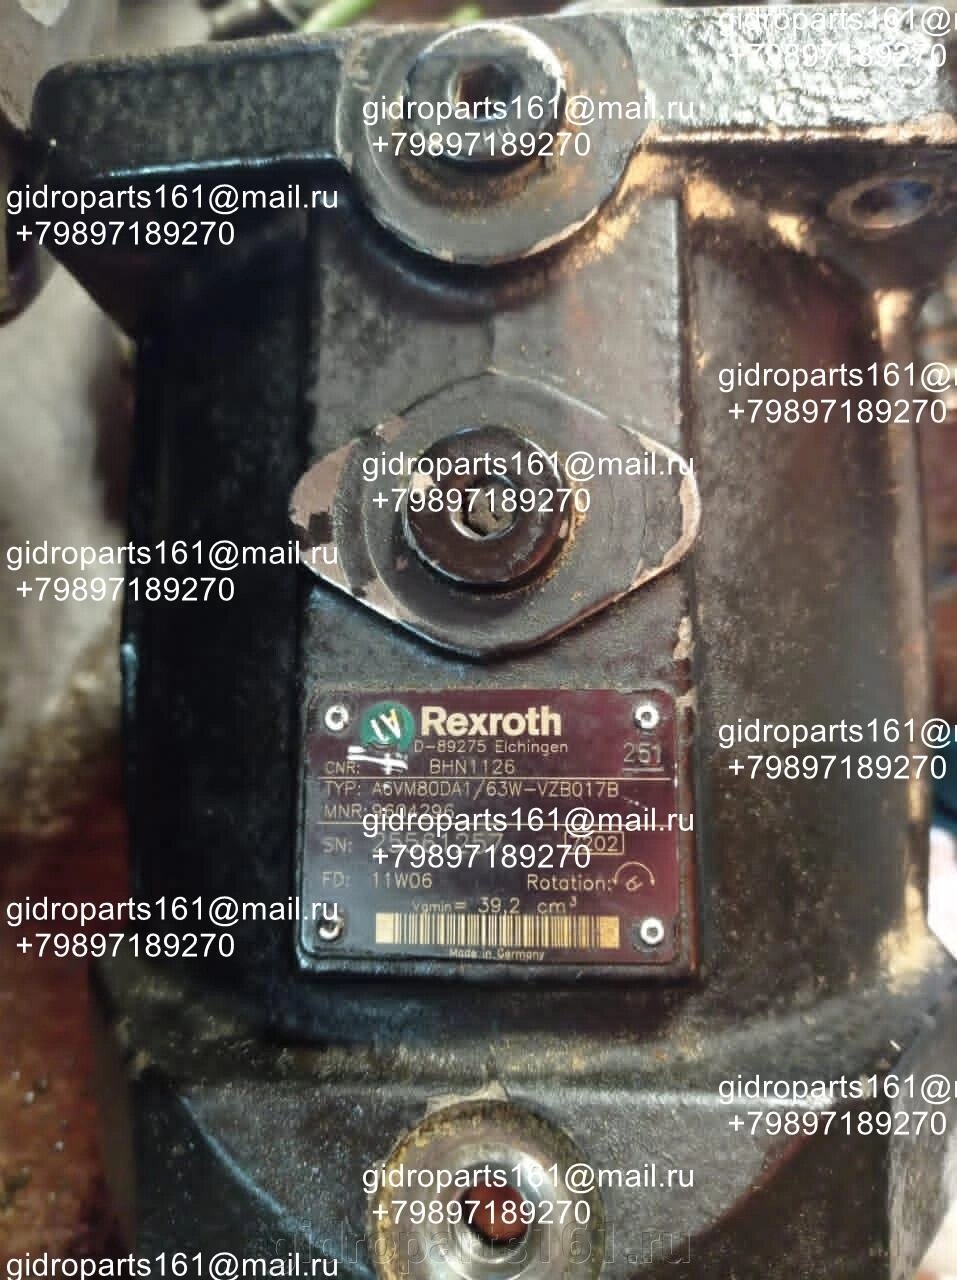 Гидромотор REXROTH A6VM80DA1/63W-VZB017B от компании Гидравлические запчасти 161 - фото 1